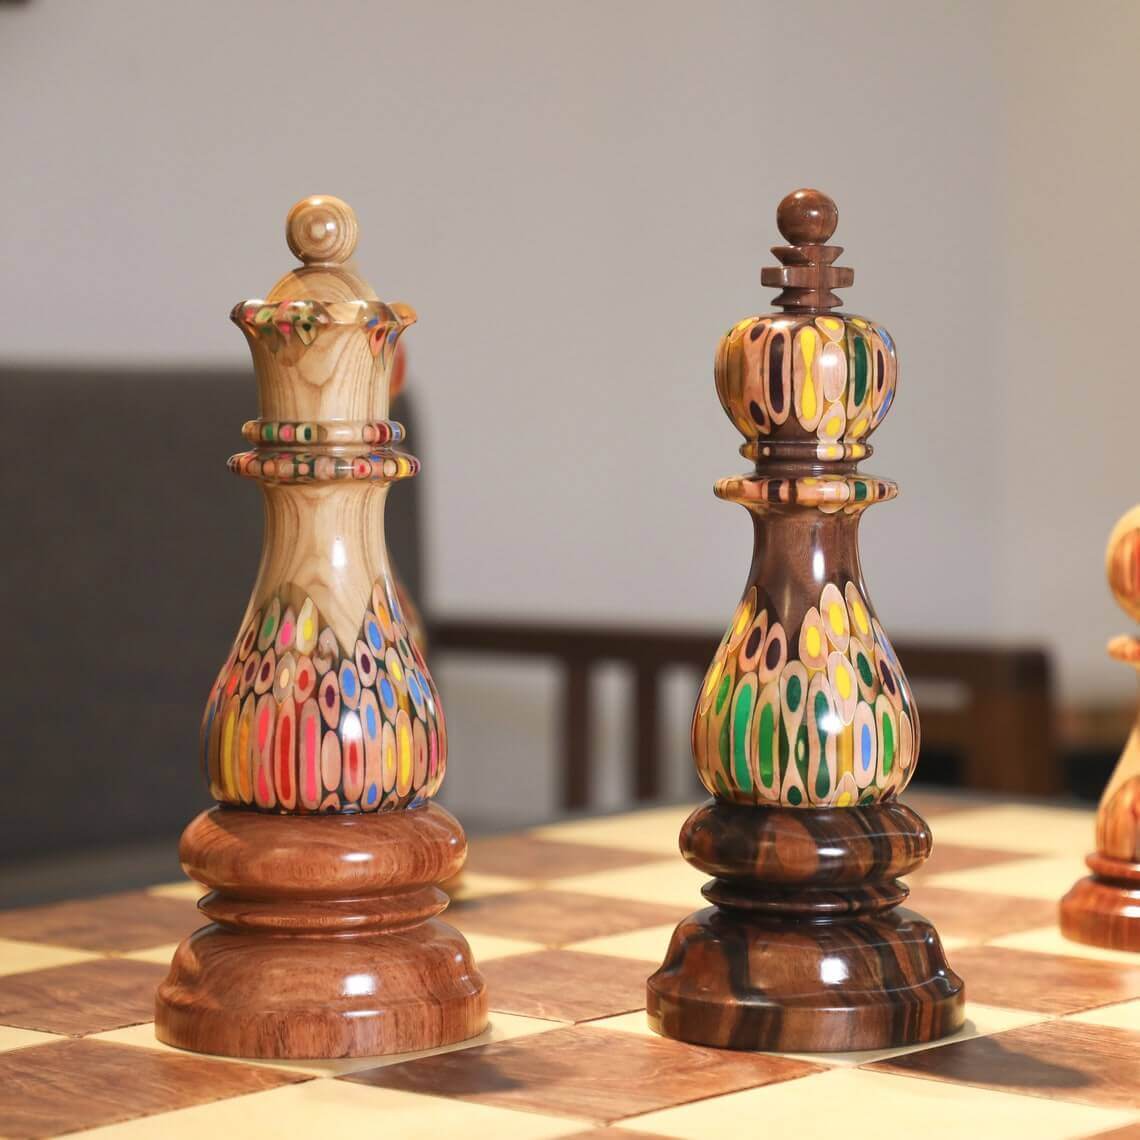 bộ cờ vua bằng gỗ